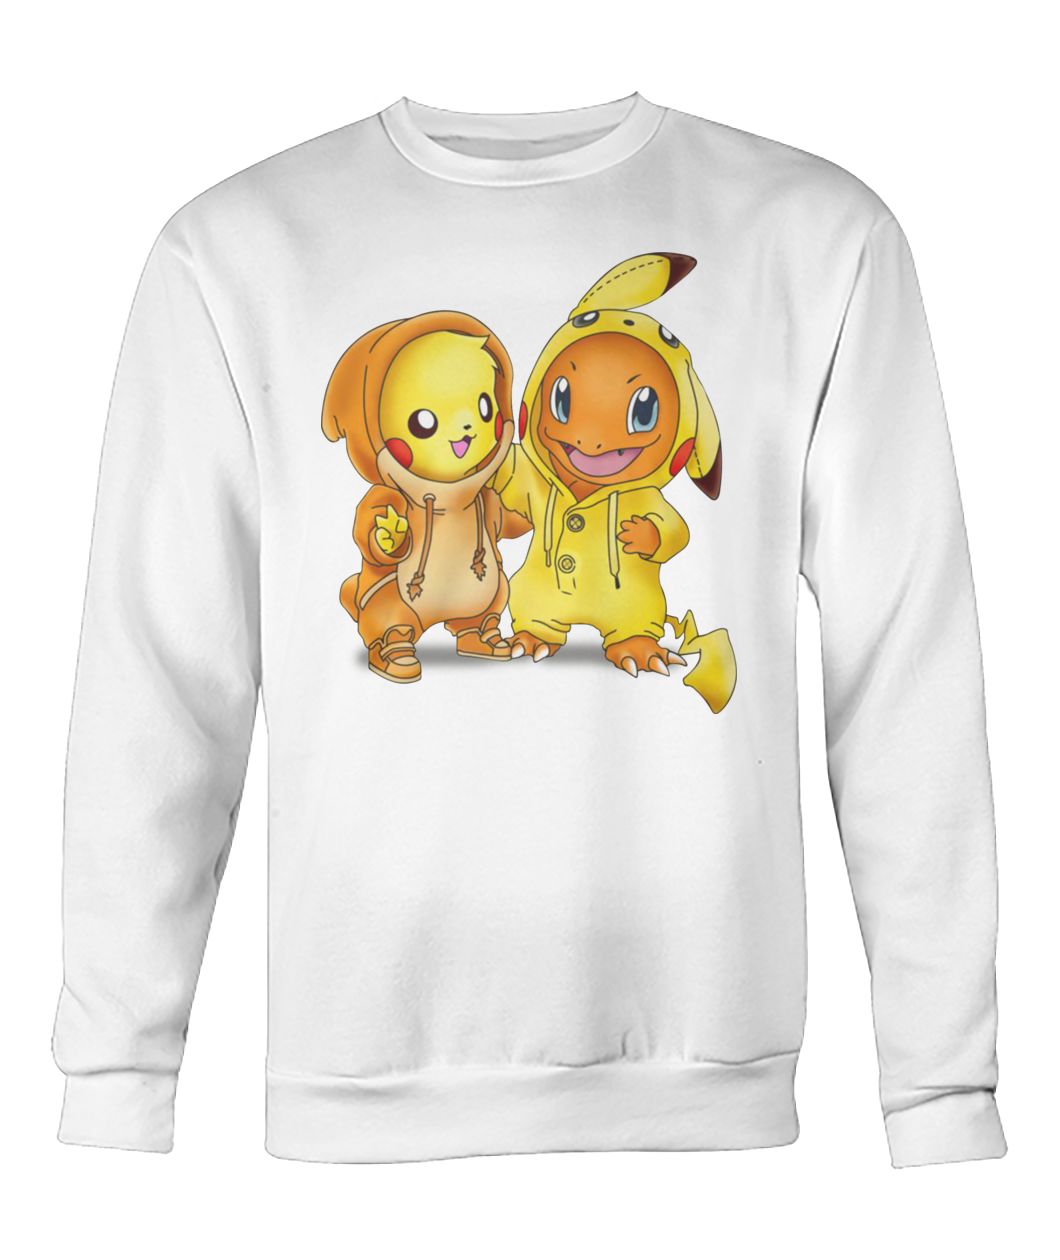 Baby pikachu hitokage charmander costume crew neck sweatshirt